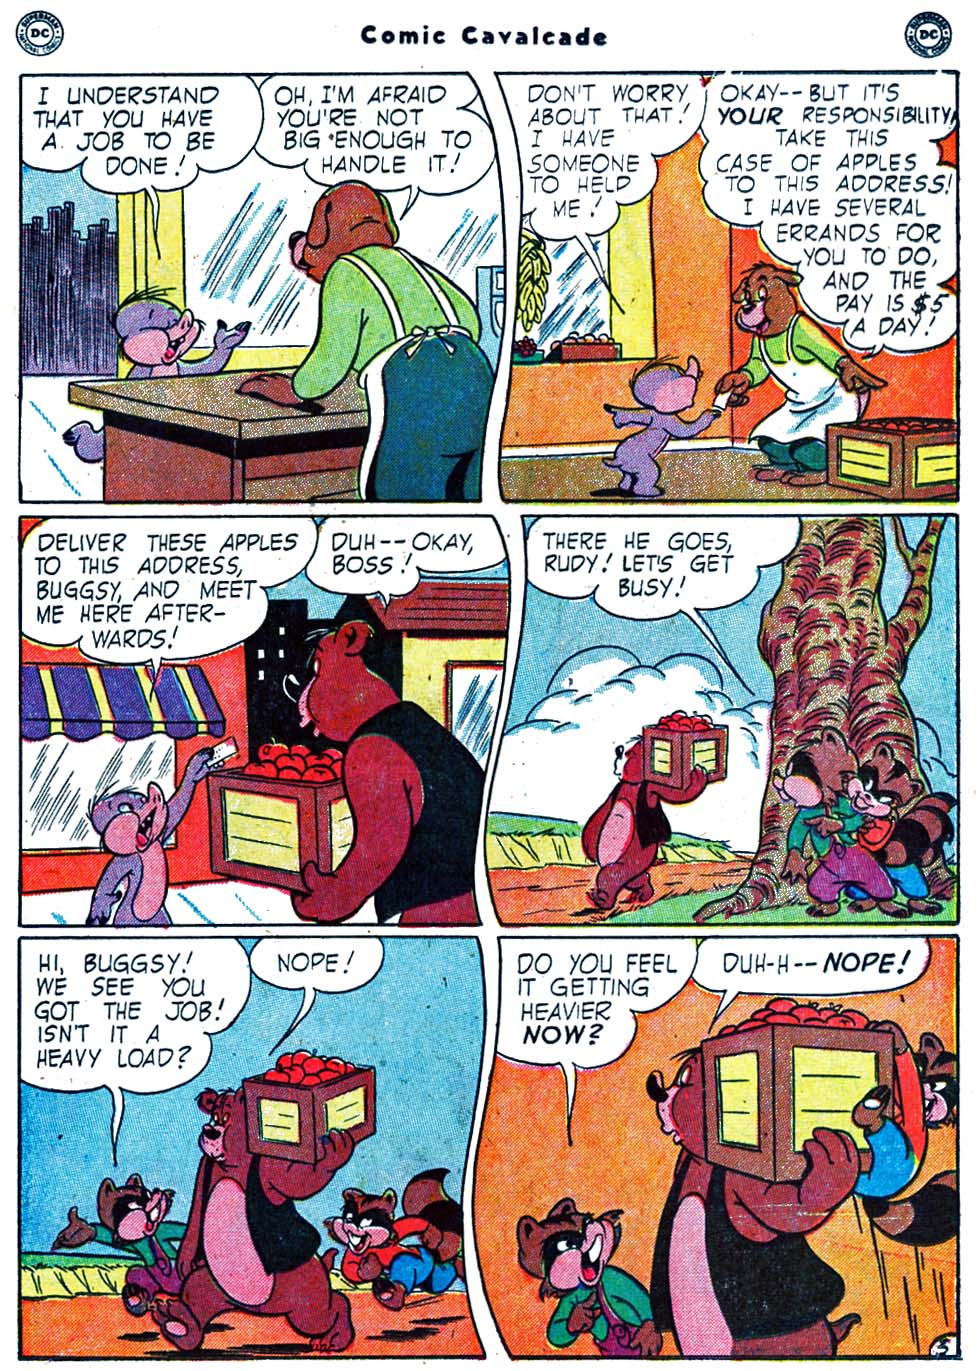 Comic Cavalcade issue 39 - Page 15